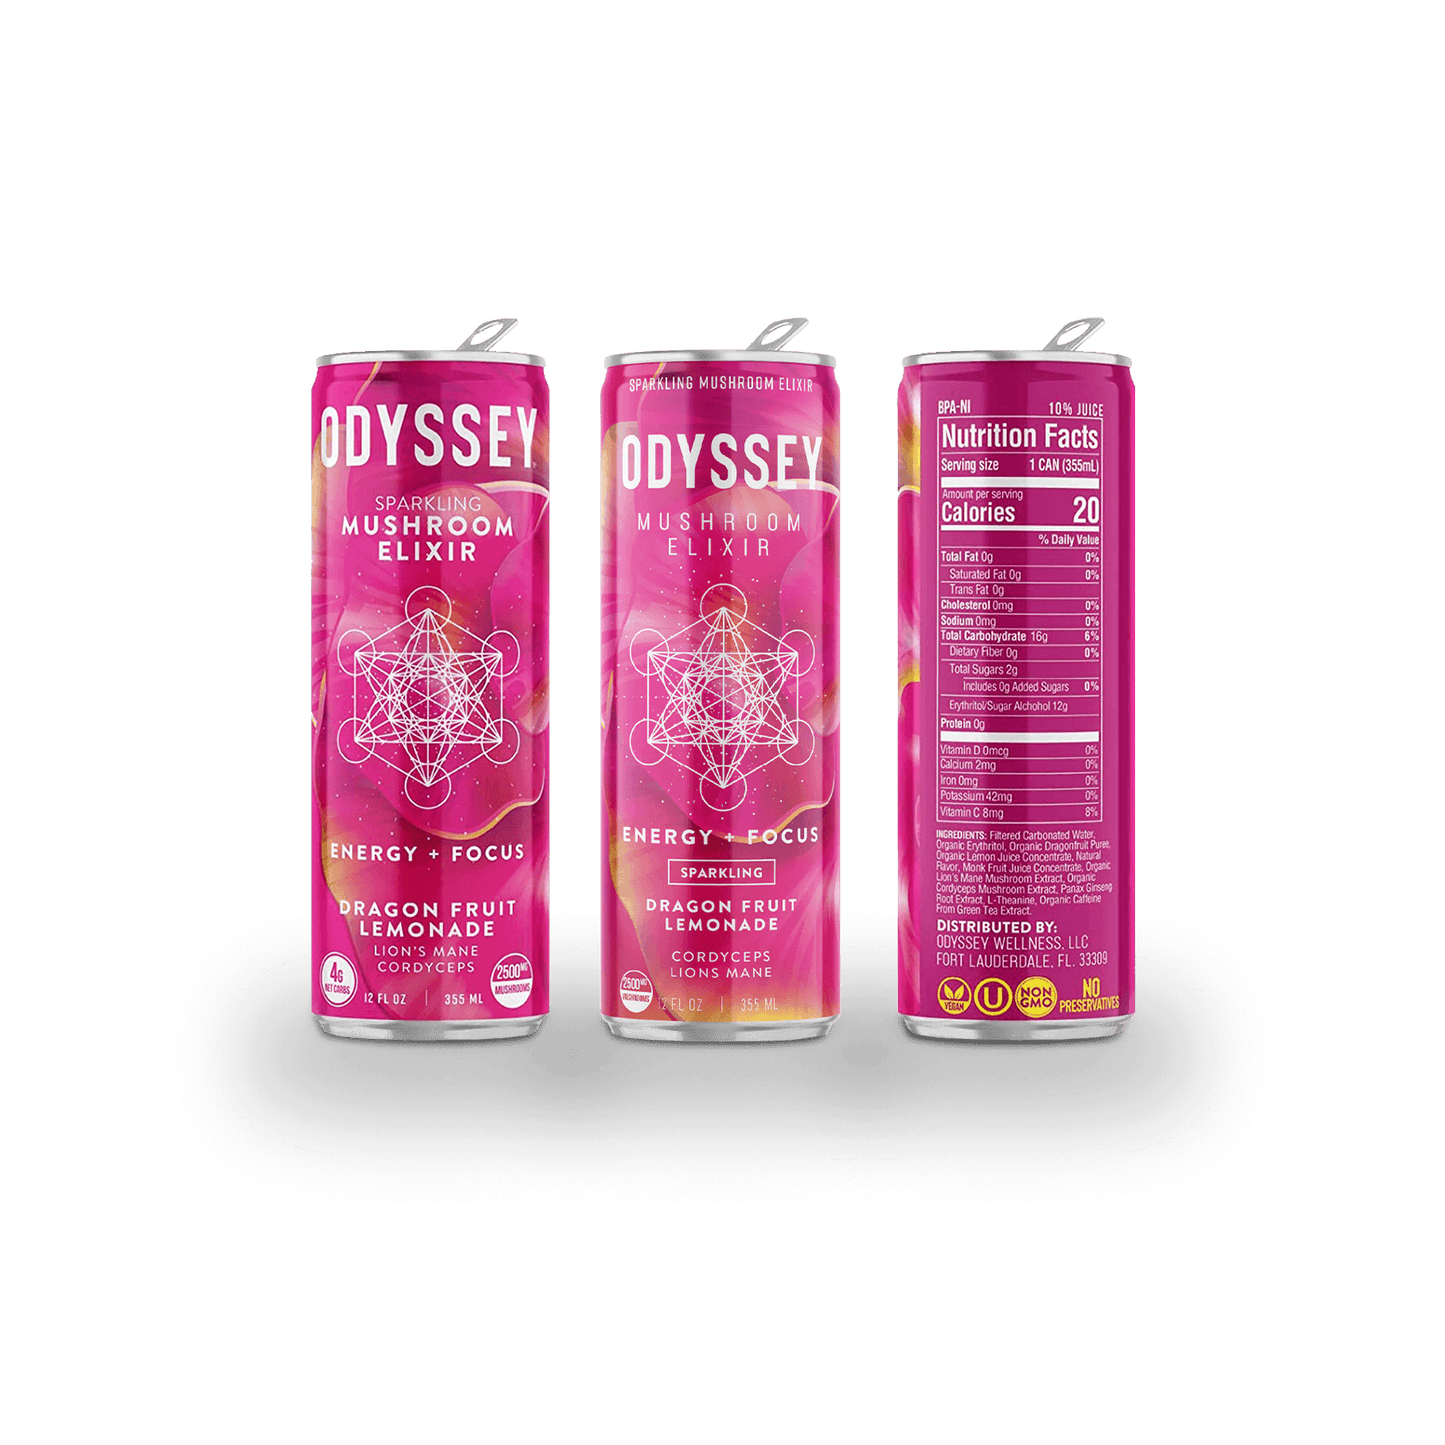 Odyssey Mushroom Elixir | Energy & Focus -Dragon Fruit Lemonade Back Label